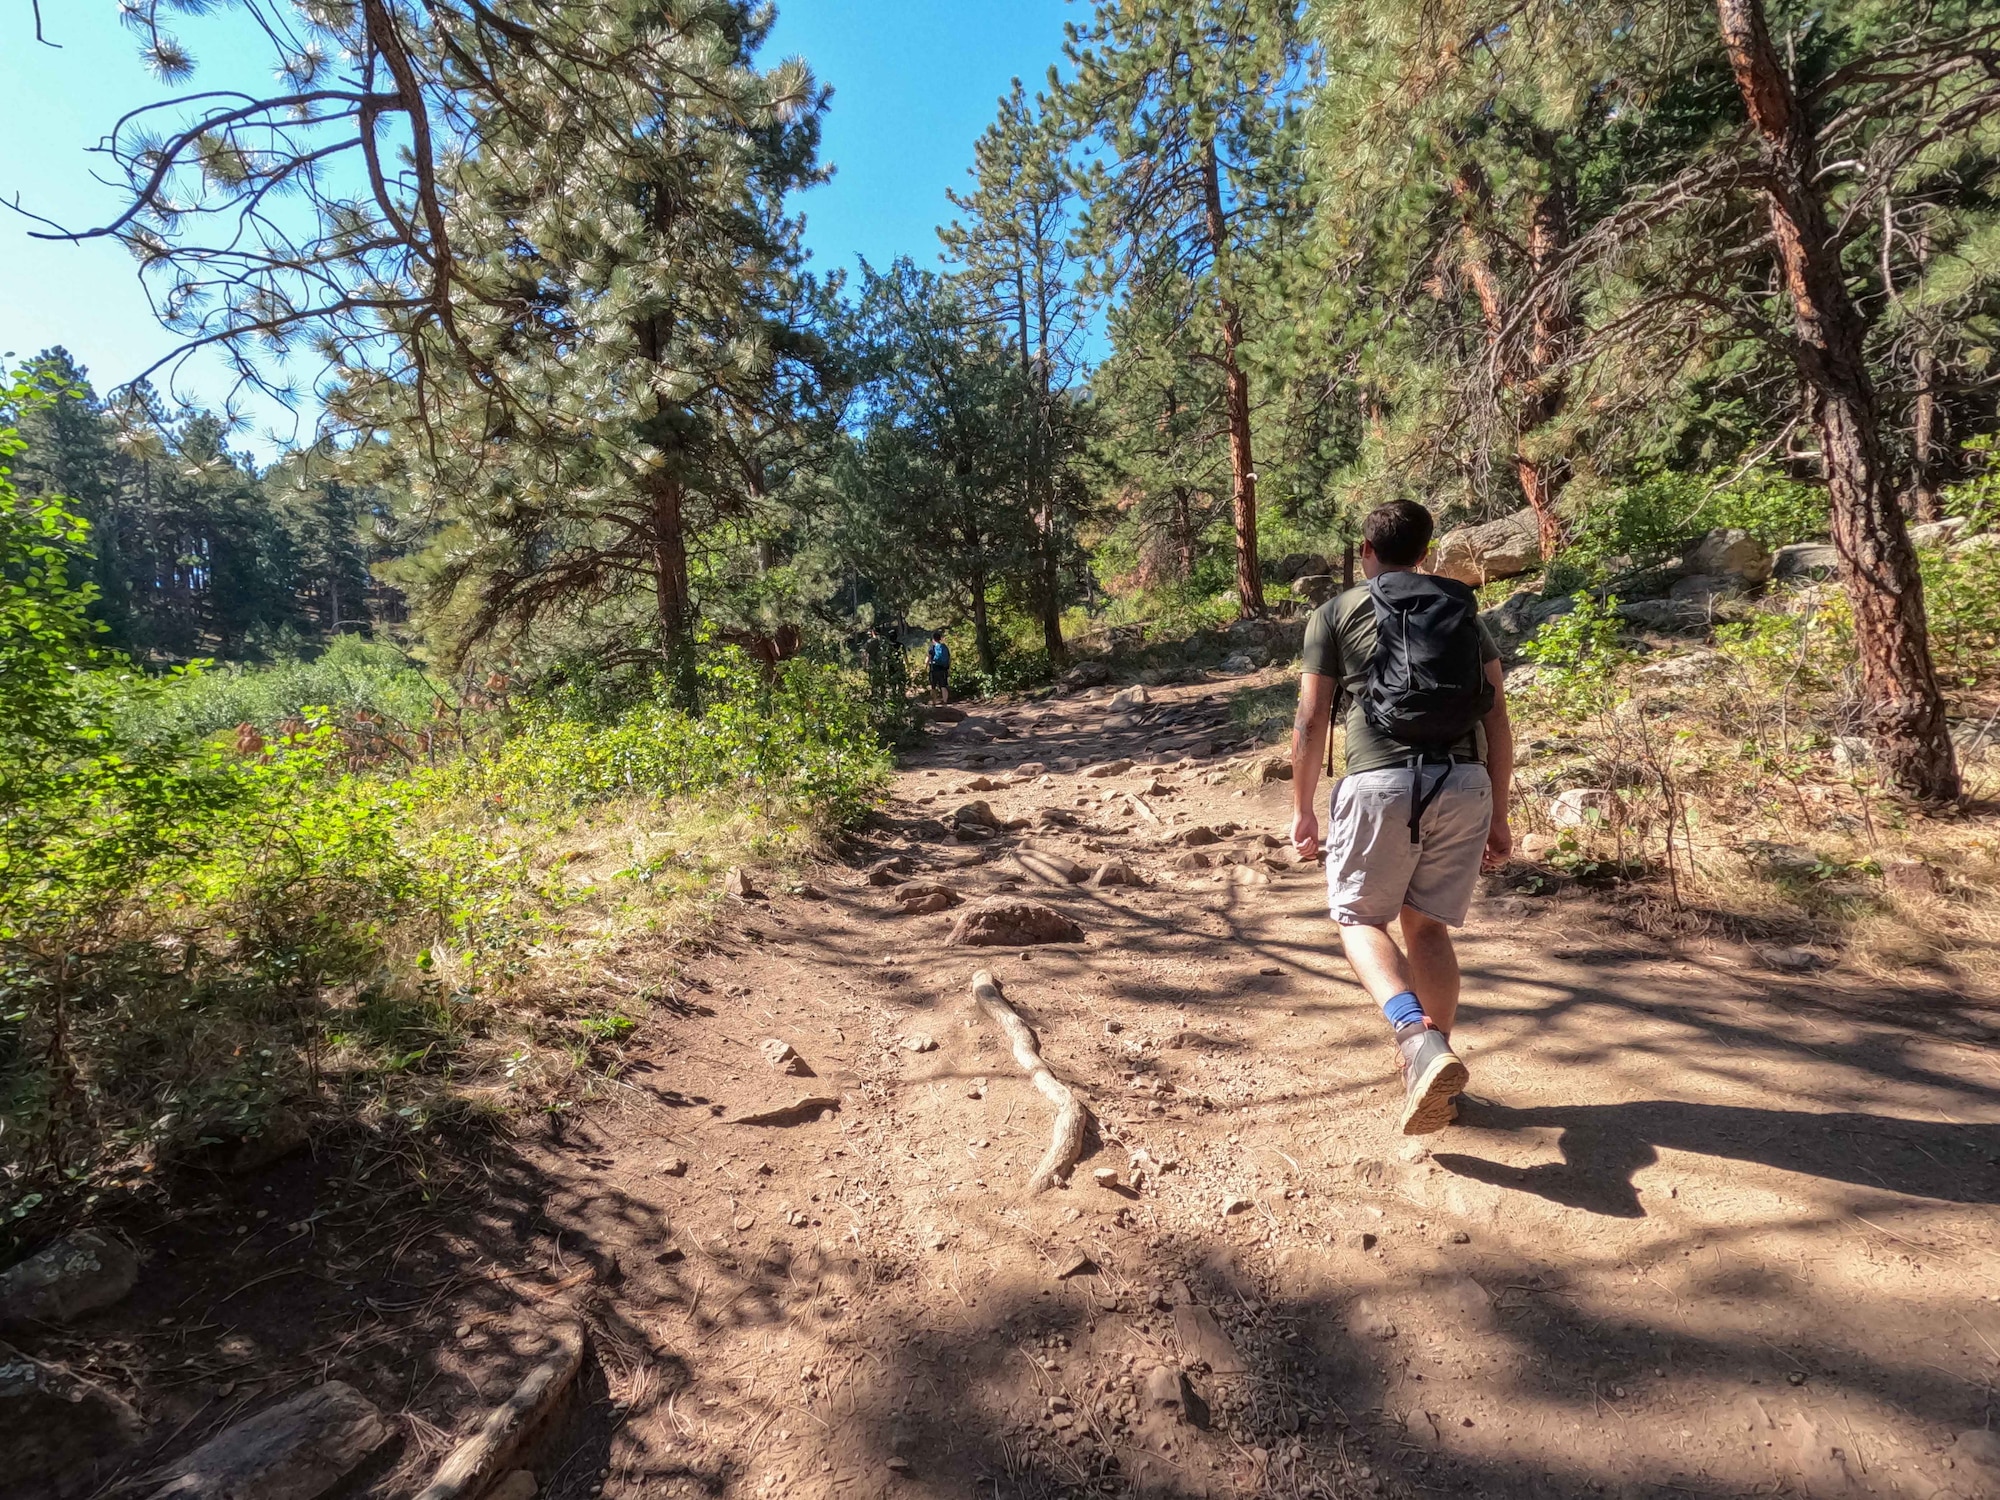 The Boulder Flatirons hiking trail